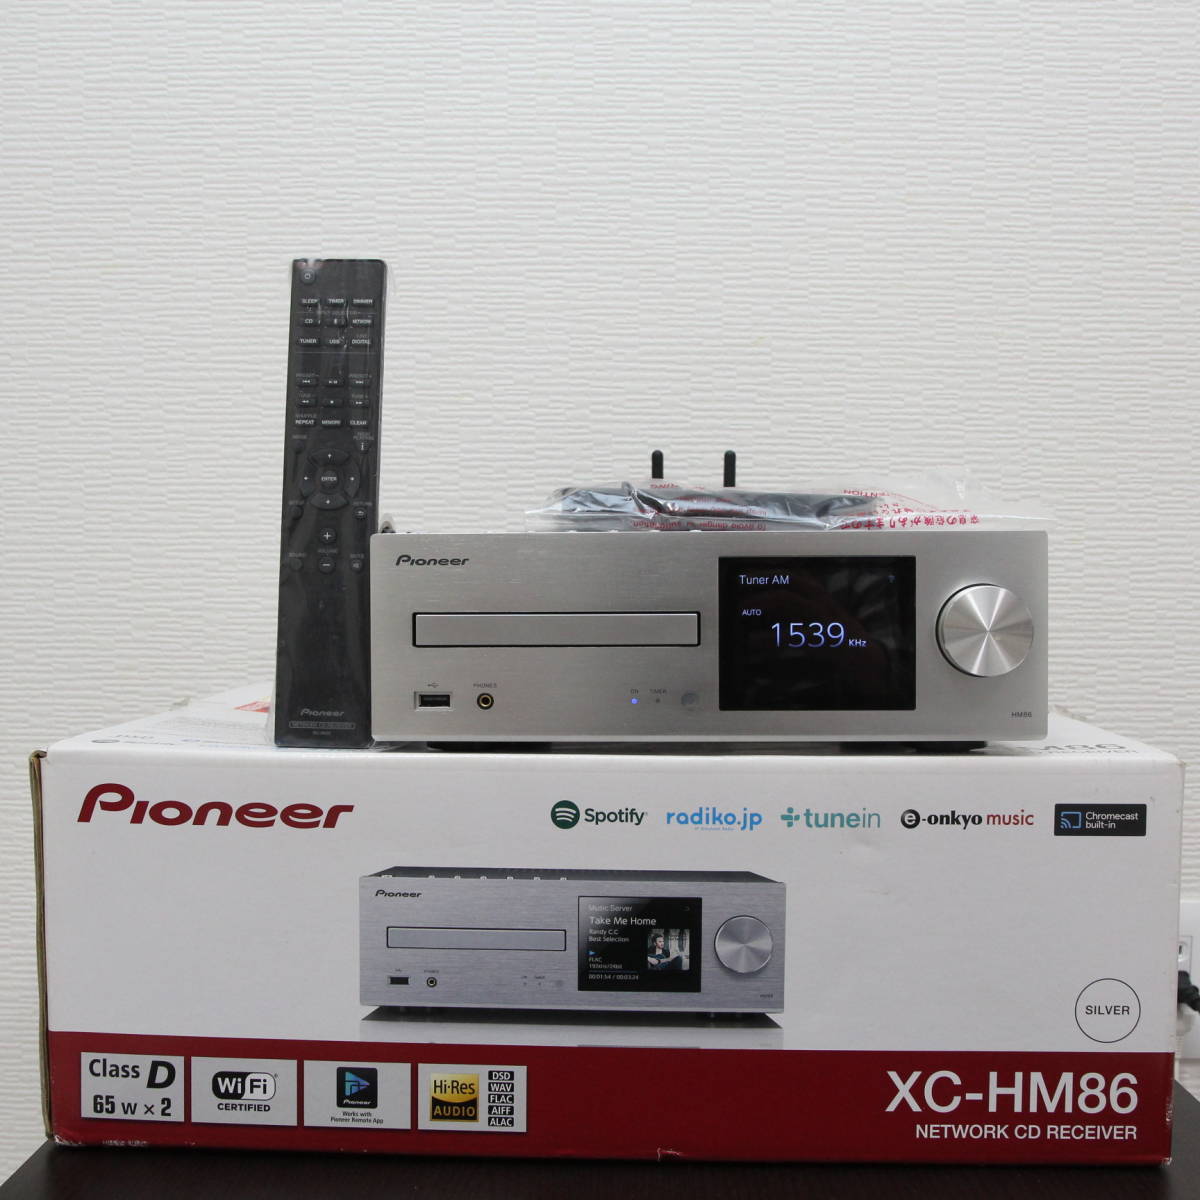 【XC-HM86】美品 付属品完備 本体 パイオニア PIONEER ハイレゾ対応 ネットワークCDレシーバー Hi-Rez 65W 4Ω Bluetooth ネットラジオ